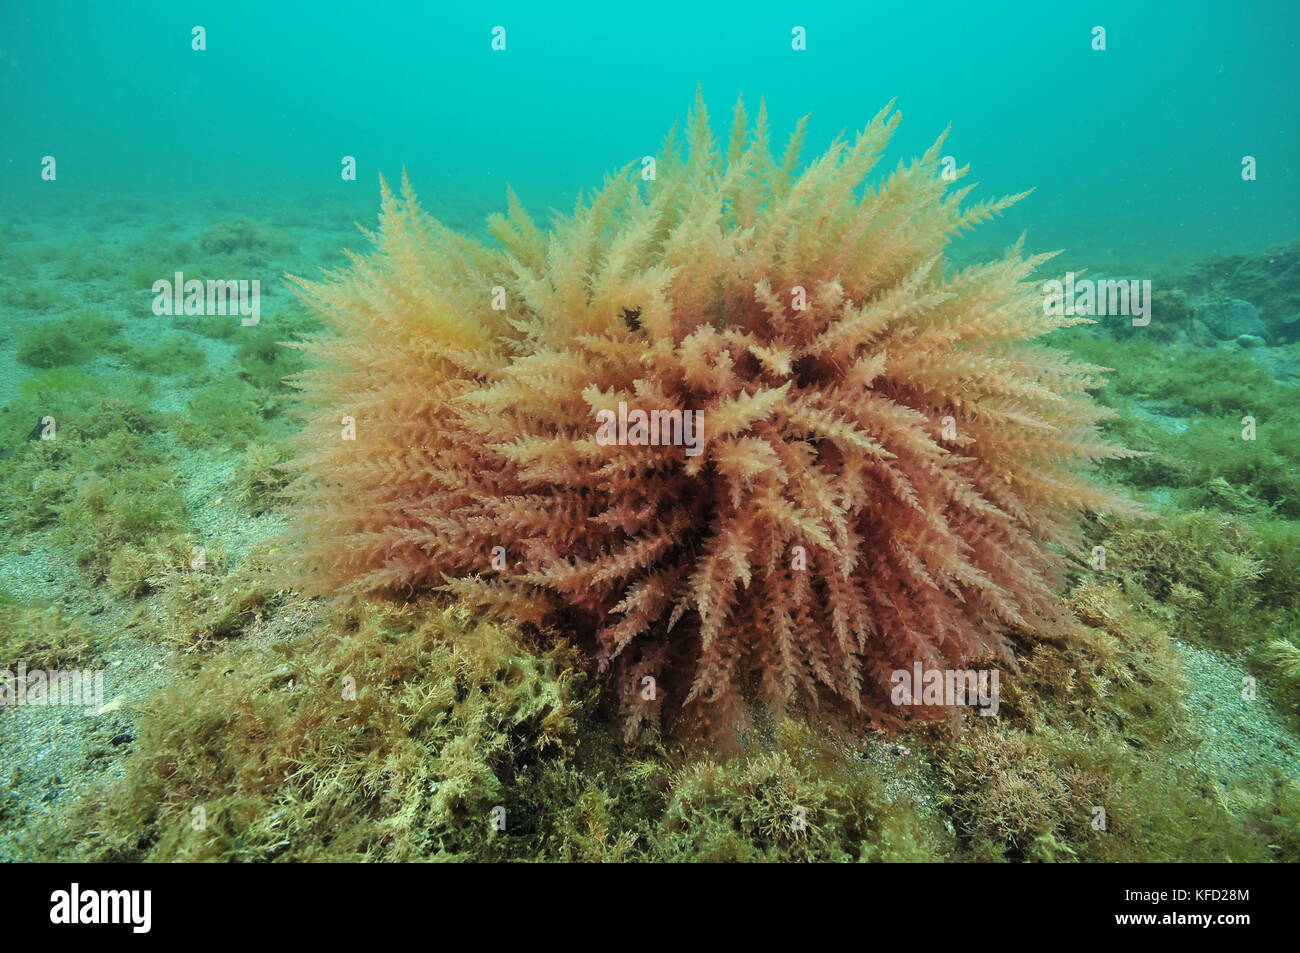 Round bush of red seaweed among algae-covered boulders on flat sandy ocean bottom. Stock Photo